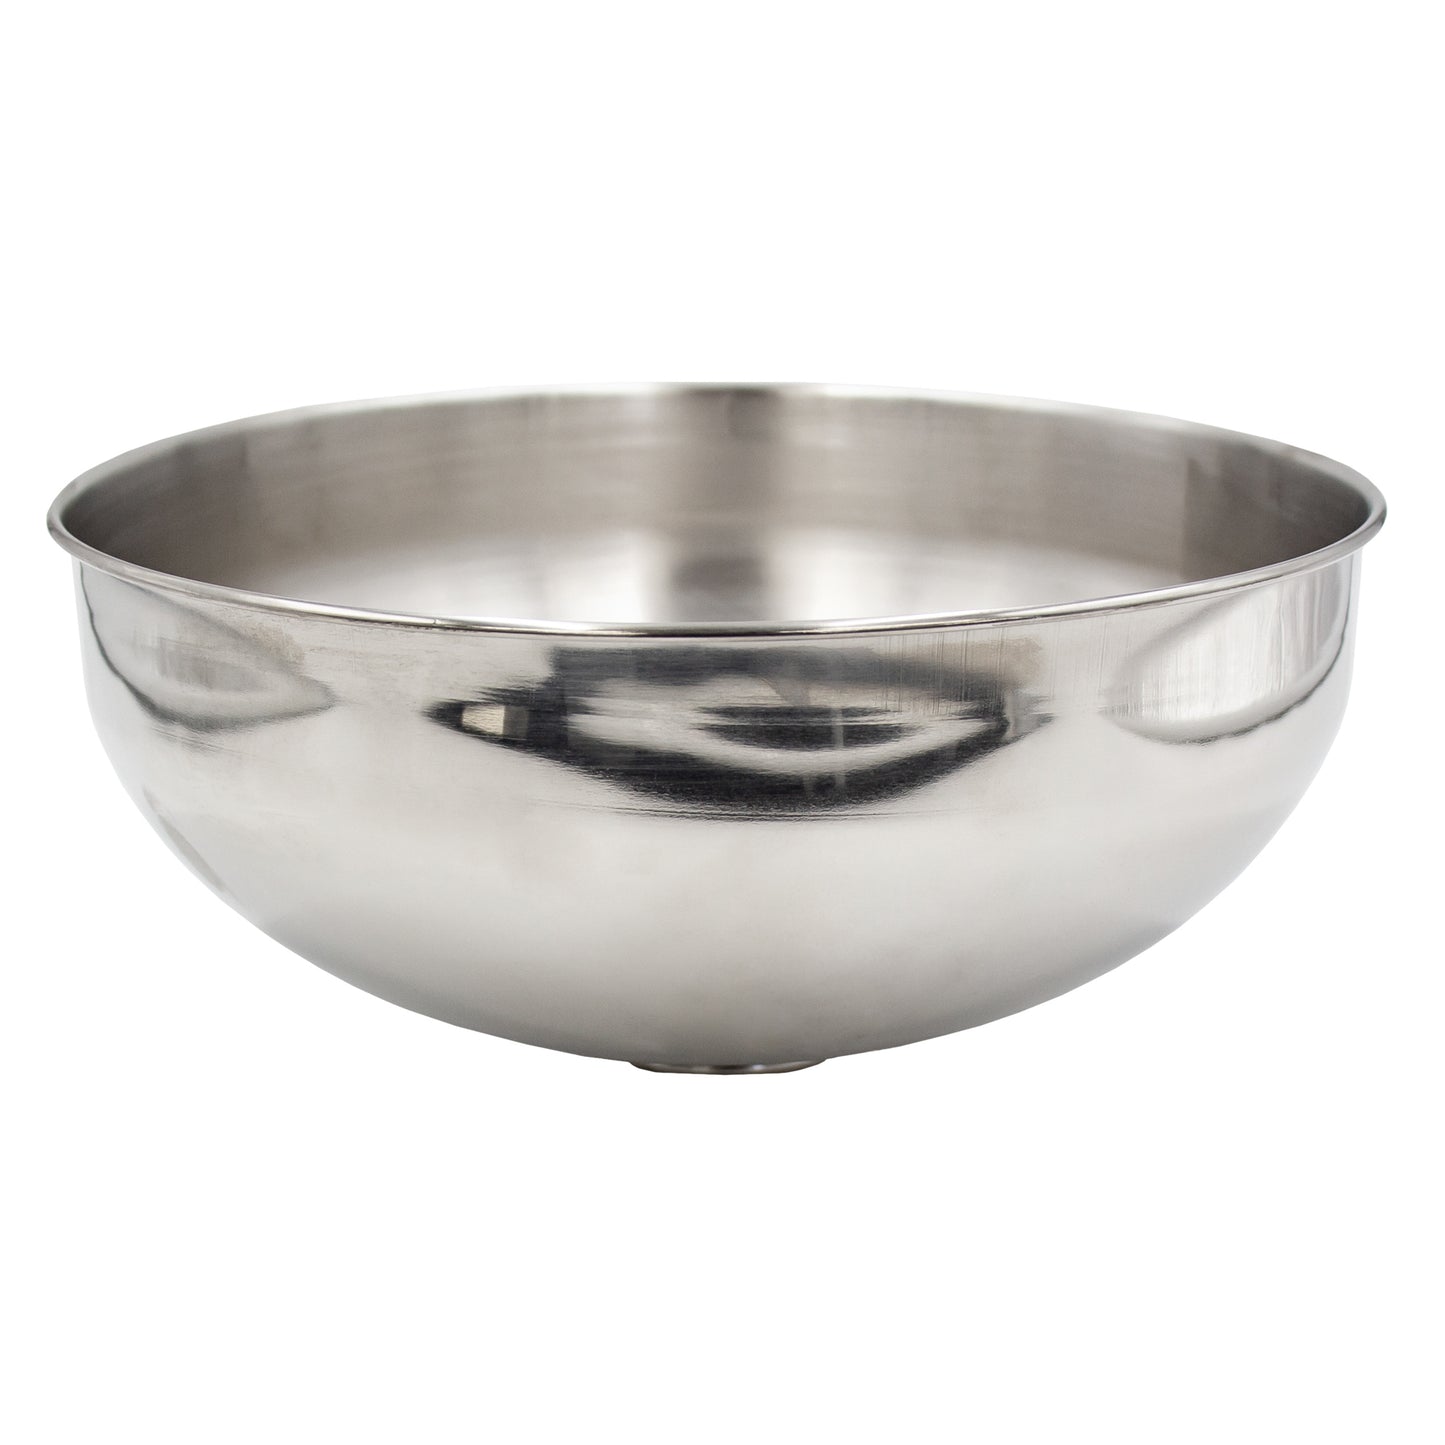 Stainless steel bowl to suit the Fabio Leonardi SP5 manual and electric passata machines.&nbsp;